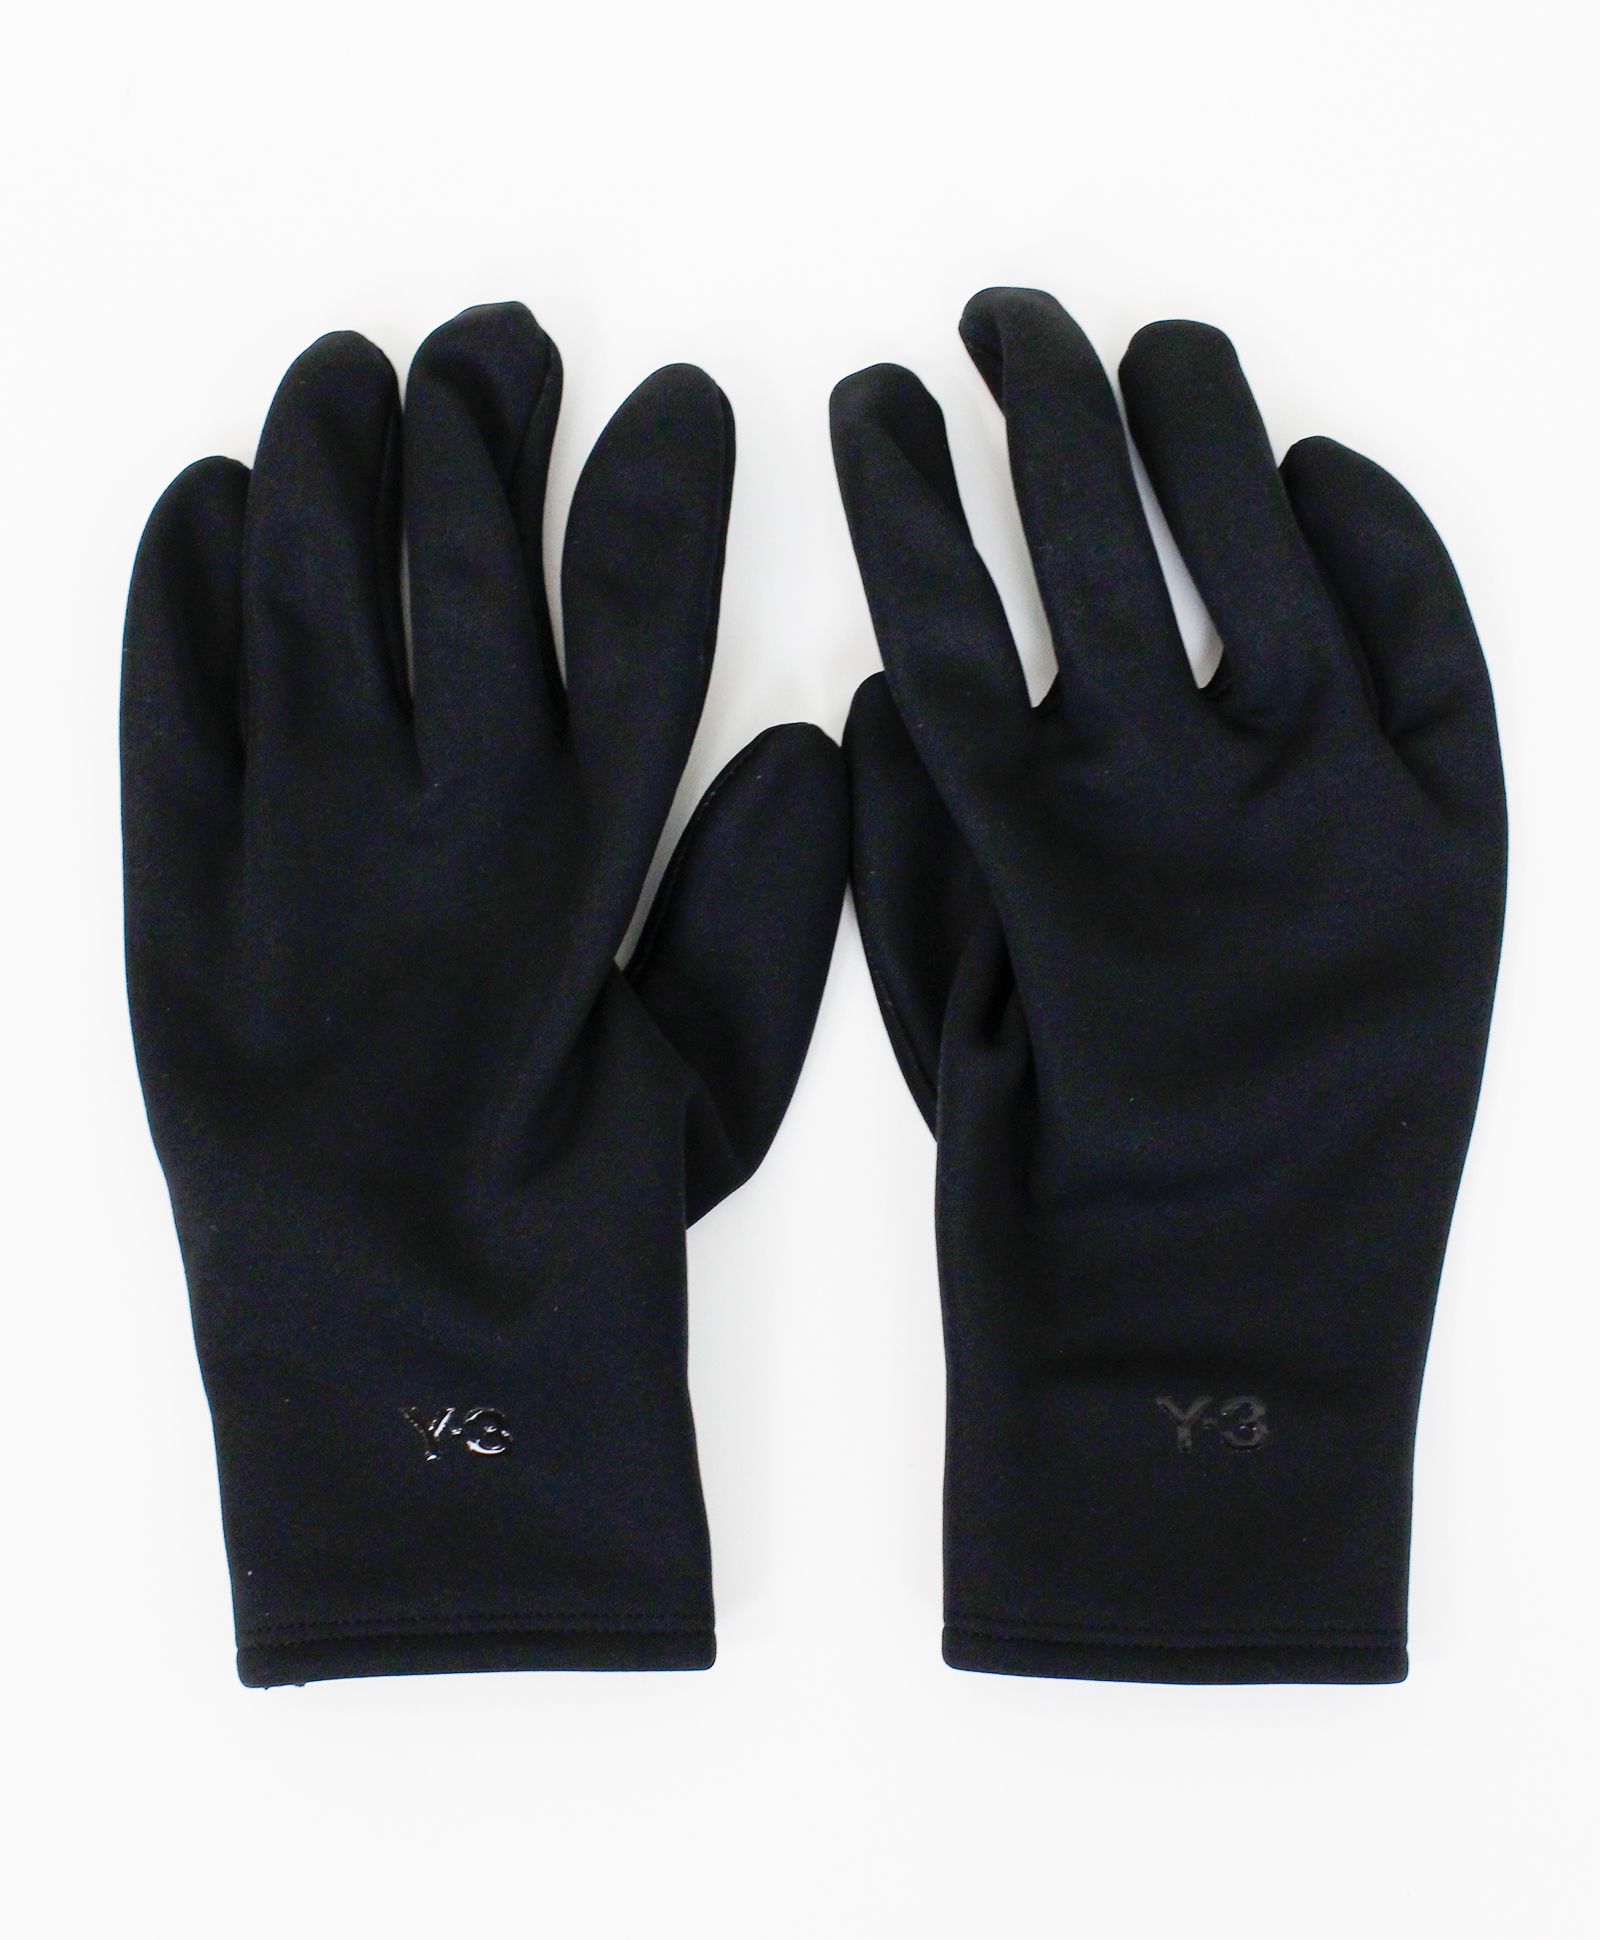 Y-3 - ゴアテックスグローブ 手袋 / Y-3 GORE-TEX GLOVES / BLACK